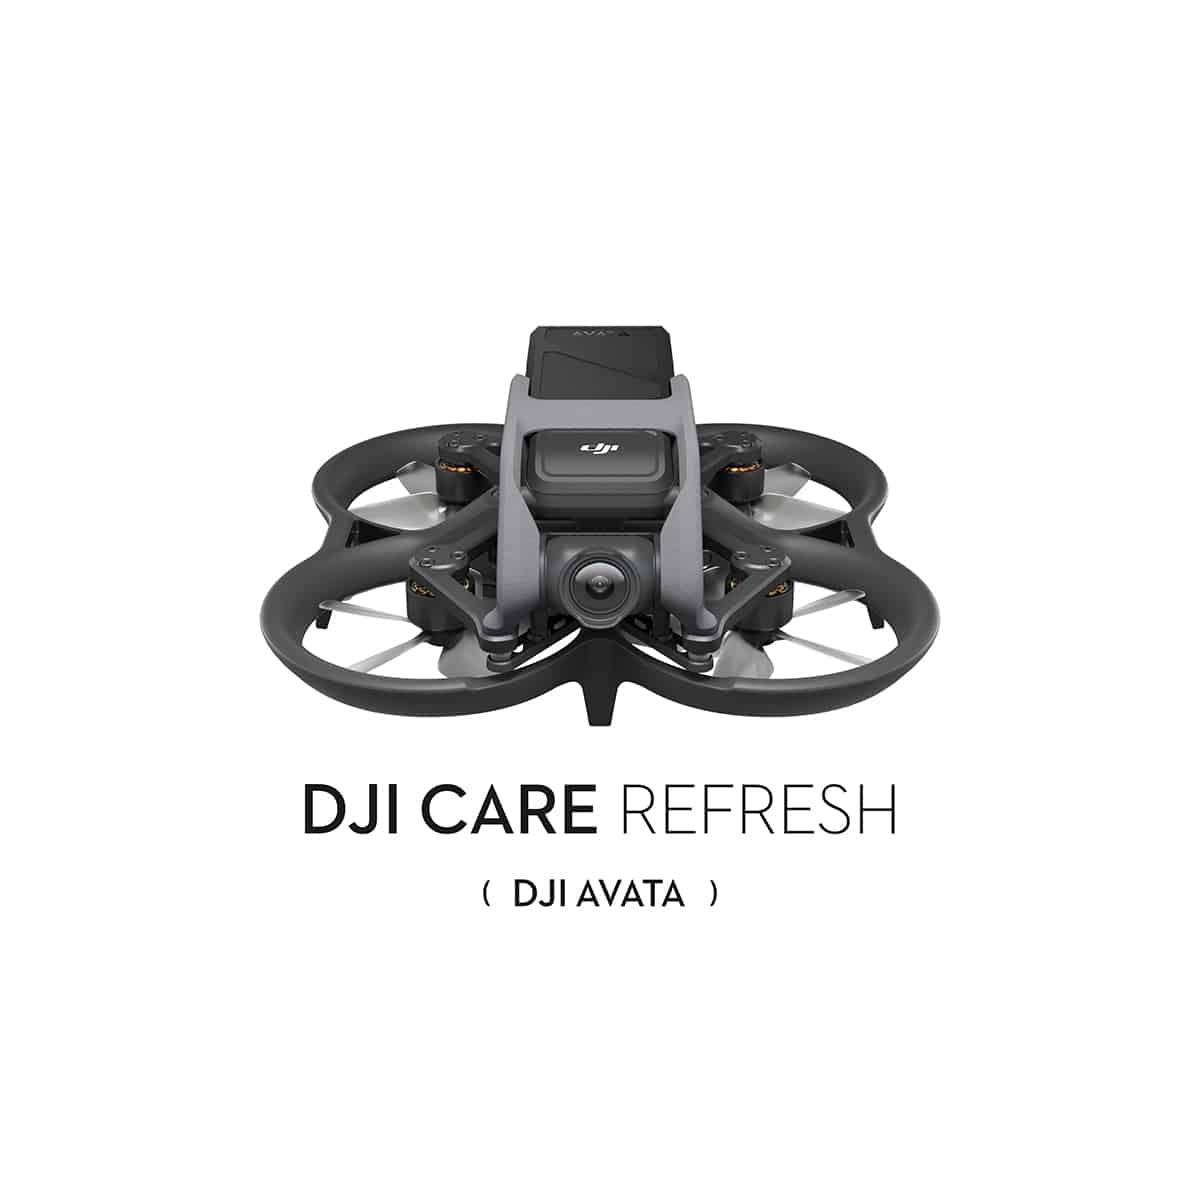 DJI Care Refresh - DJI Avata - 1 Year